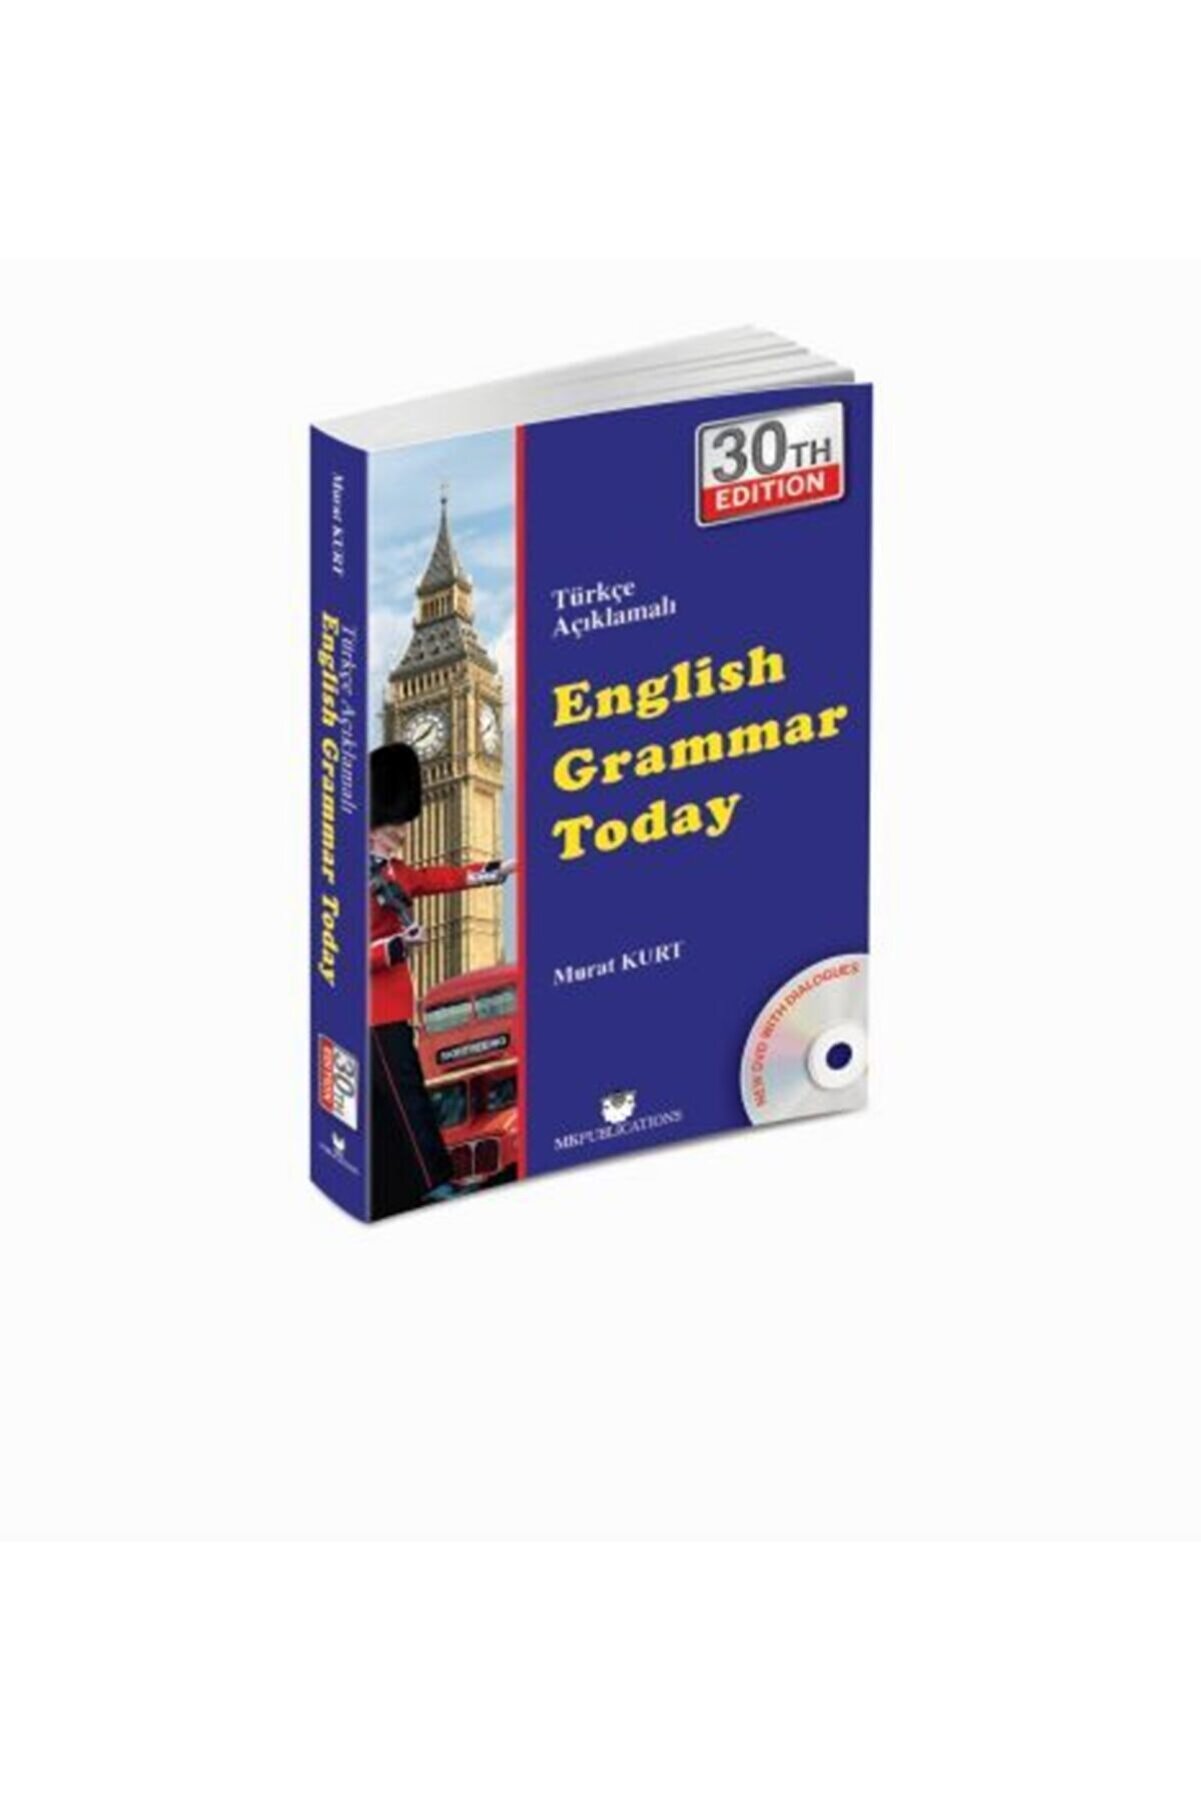 MK Publications English Grammar Today (TÜRKÇE AÇIKLAMALI İNGİLİZCE GRAMER)